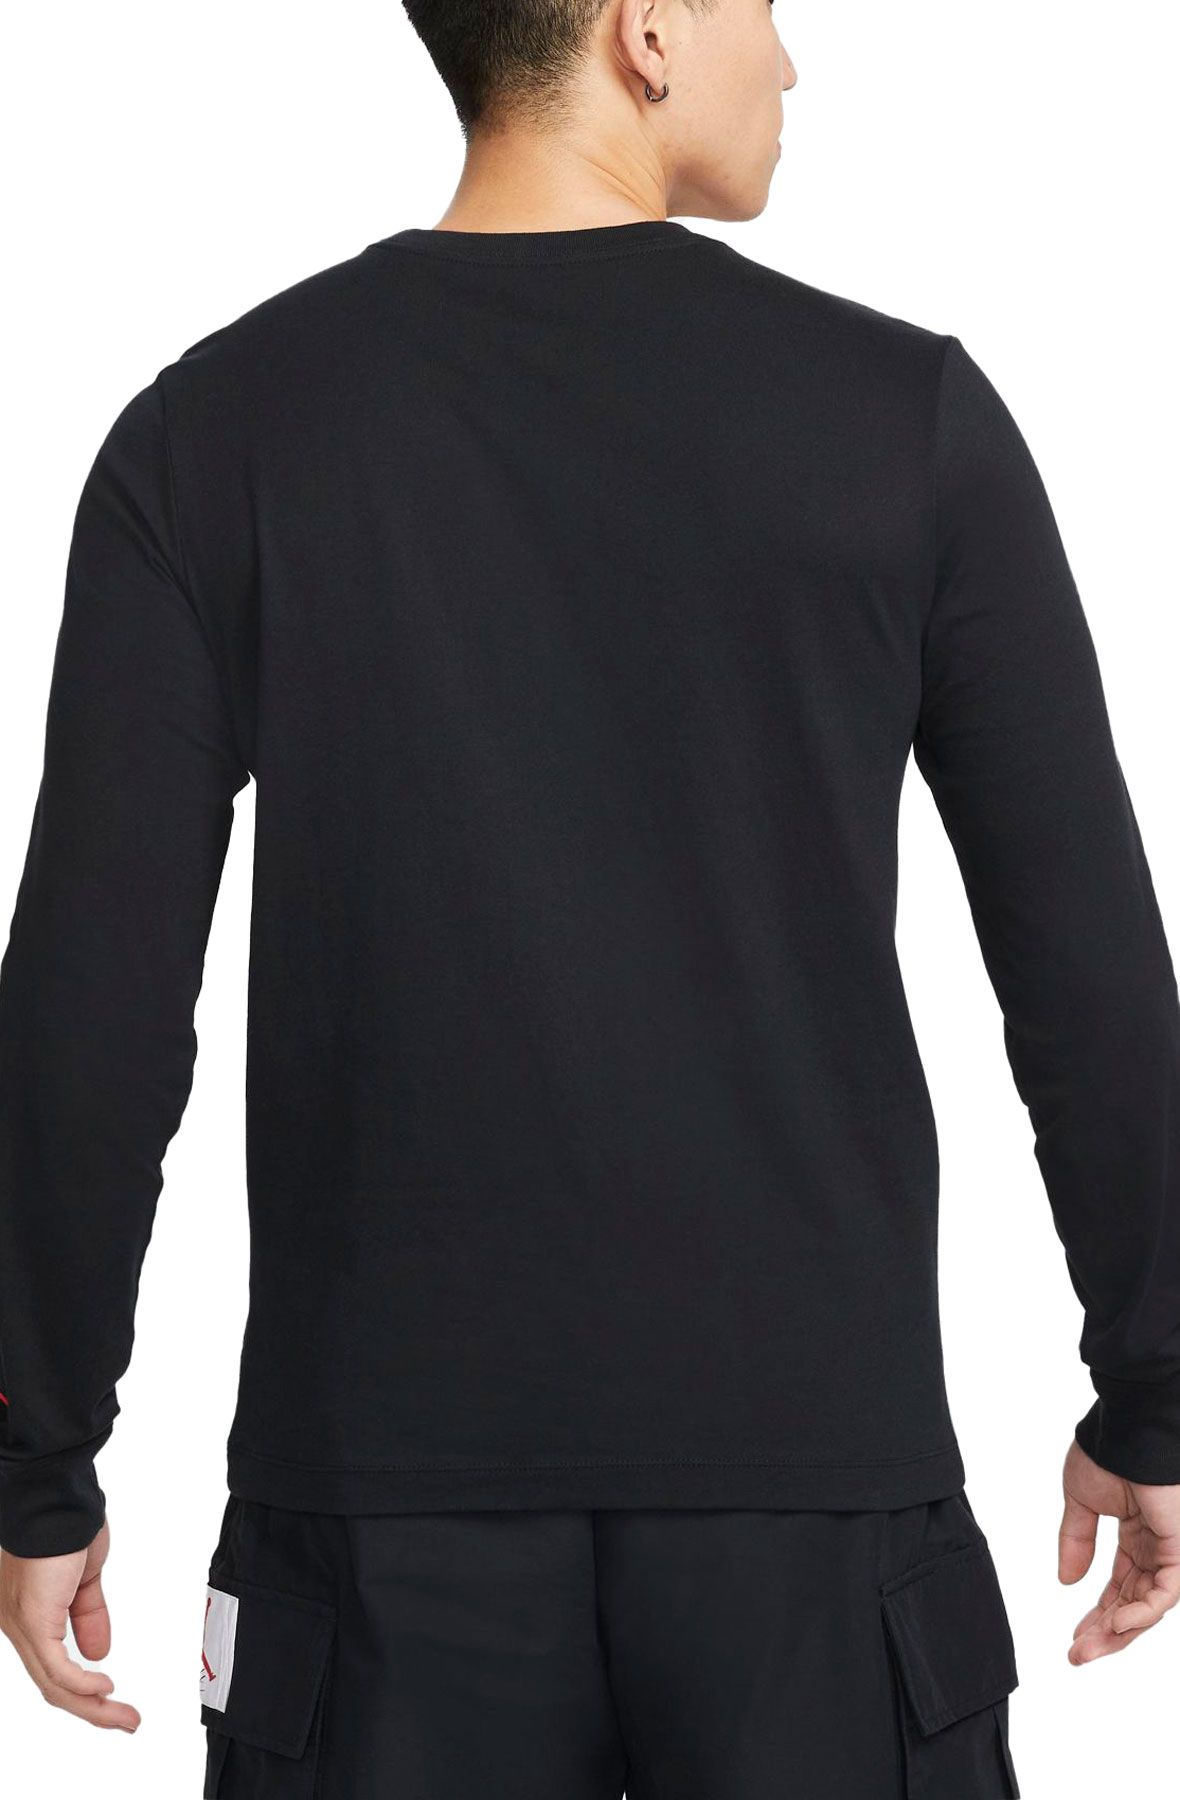 JORDAN Brand Holiday Long-Sleeve T-Shirt DC9793 010 - Shiekh